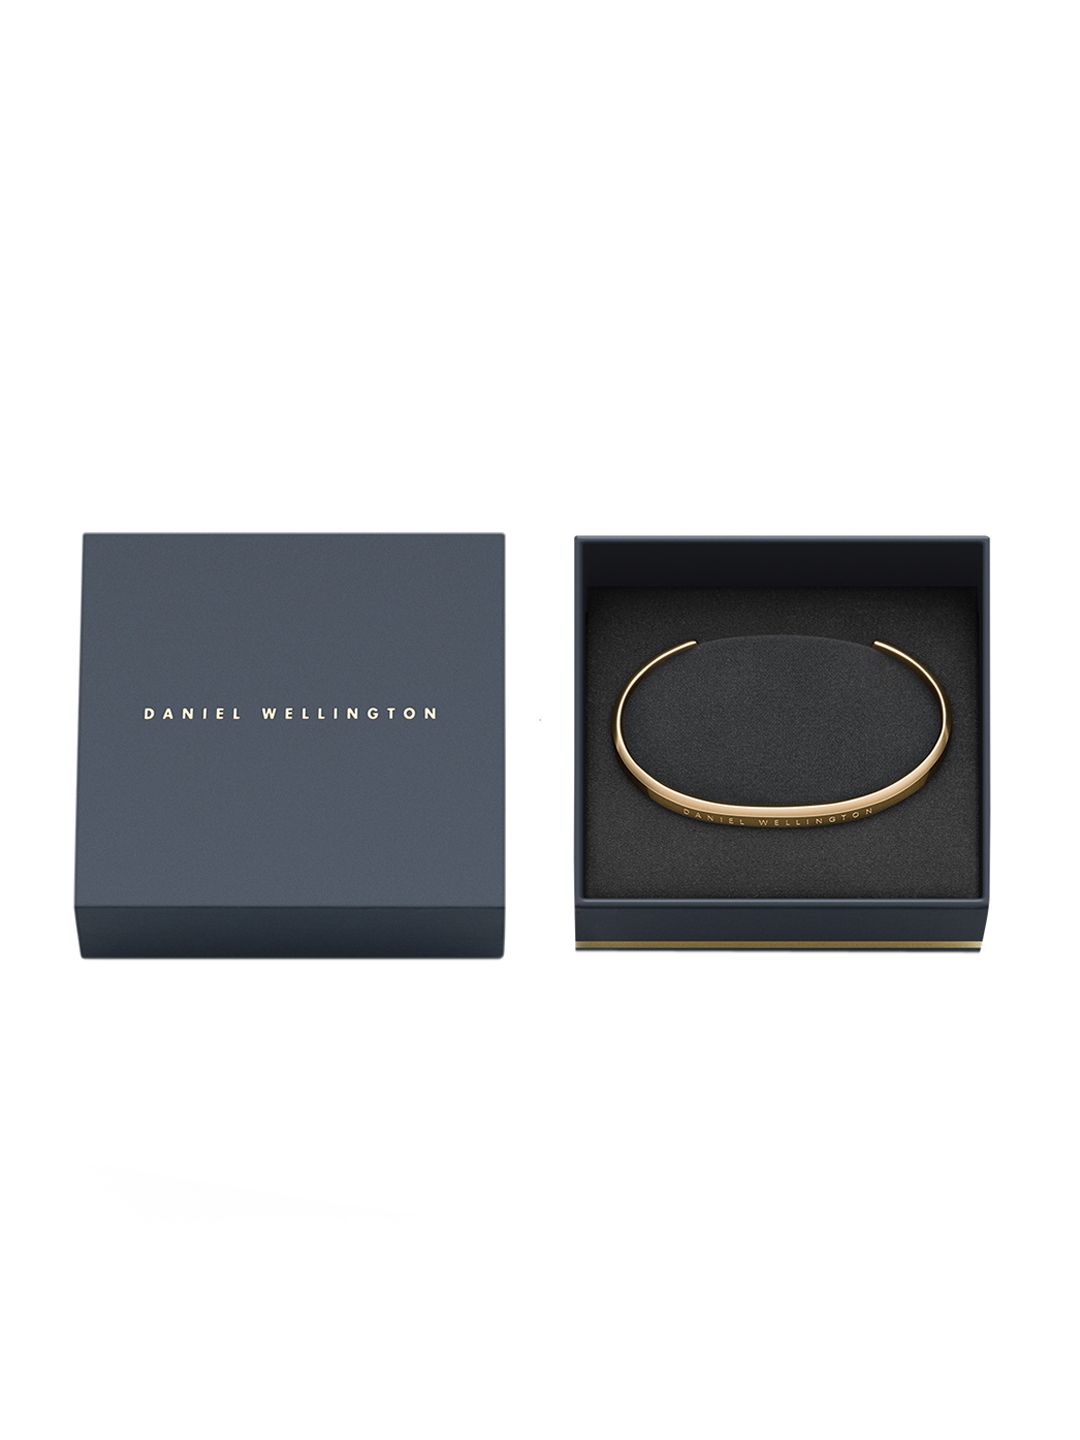 Daniel Wellington Gold-Toned Bracelet Price in India